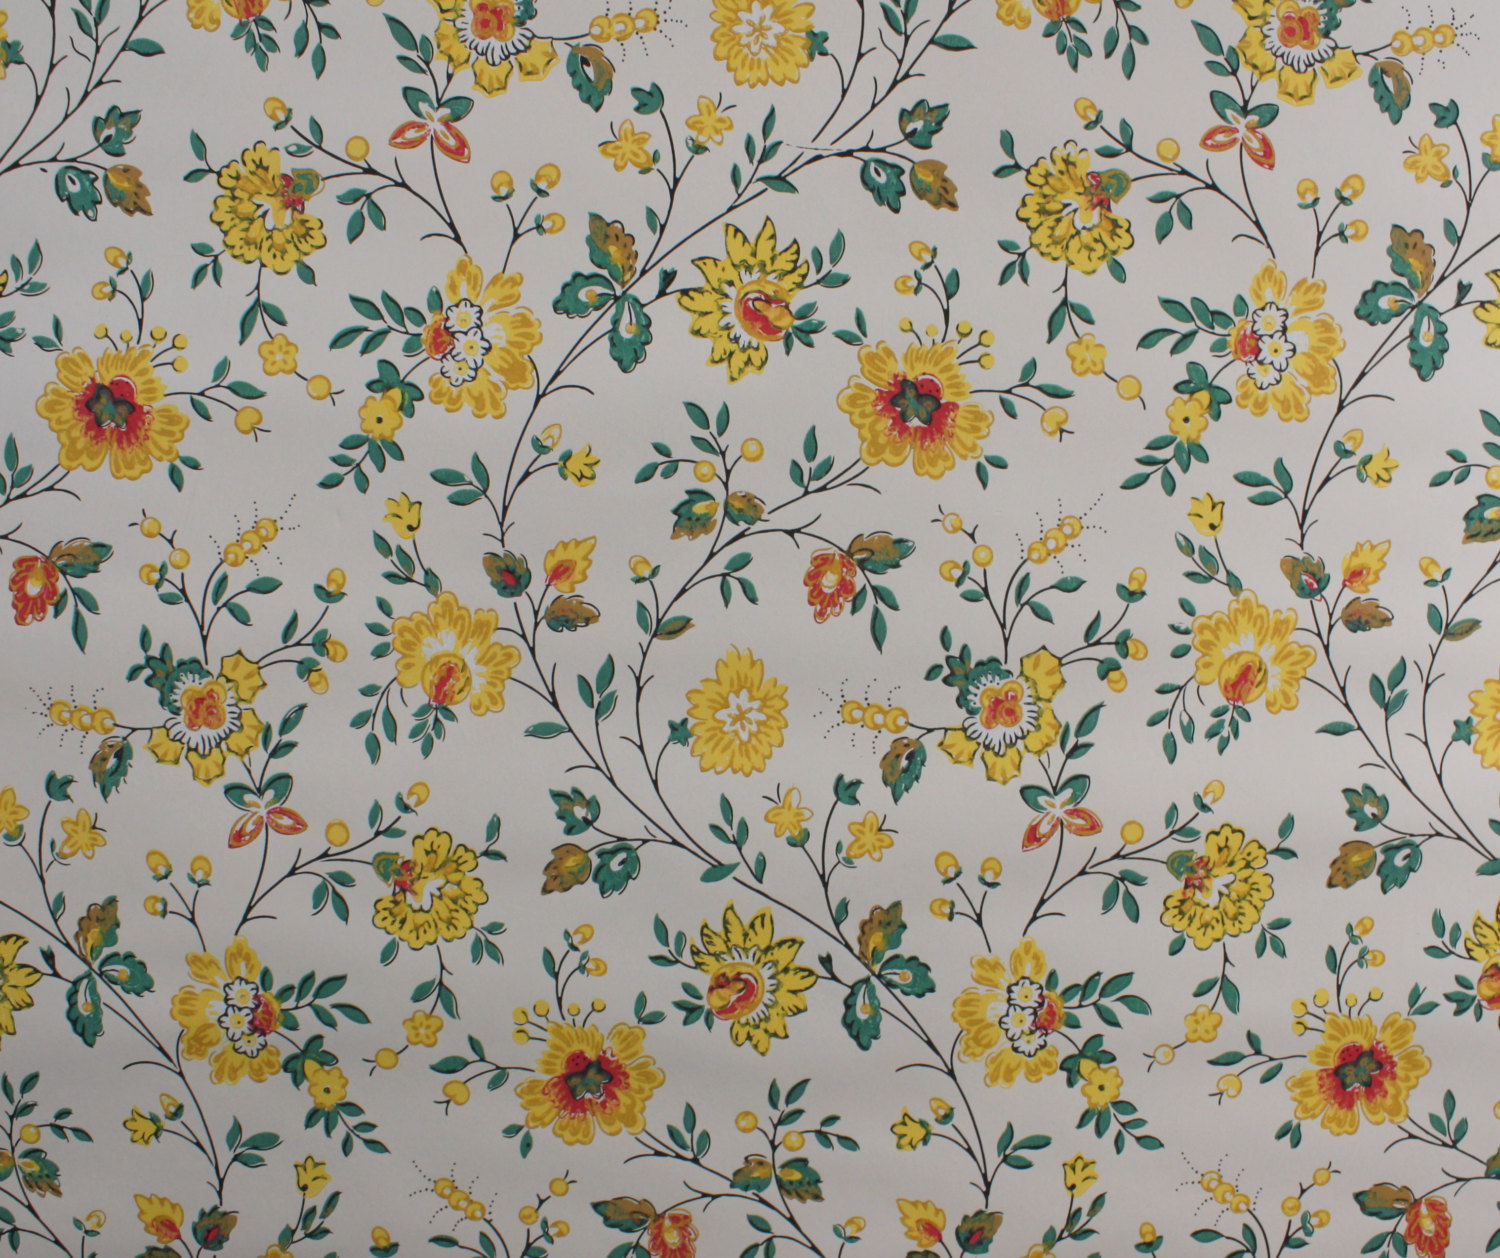 S Vintage Wallpaper Floral By Hannahstreasures